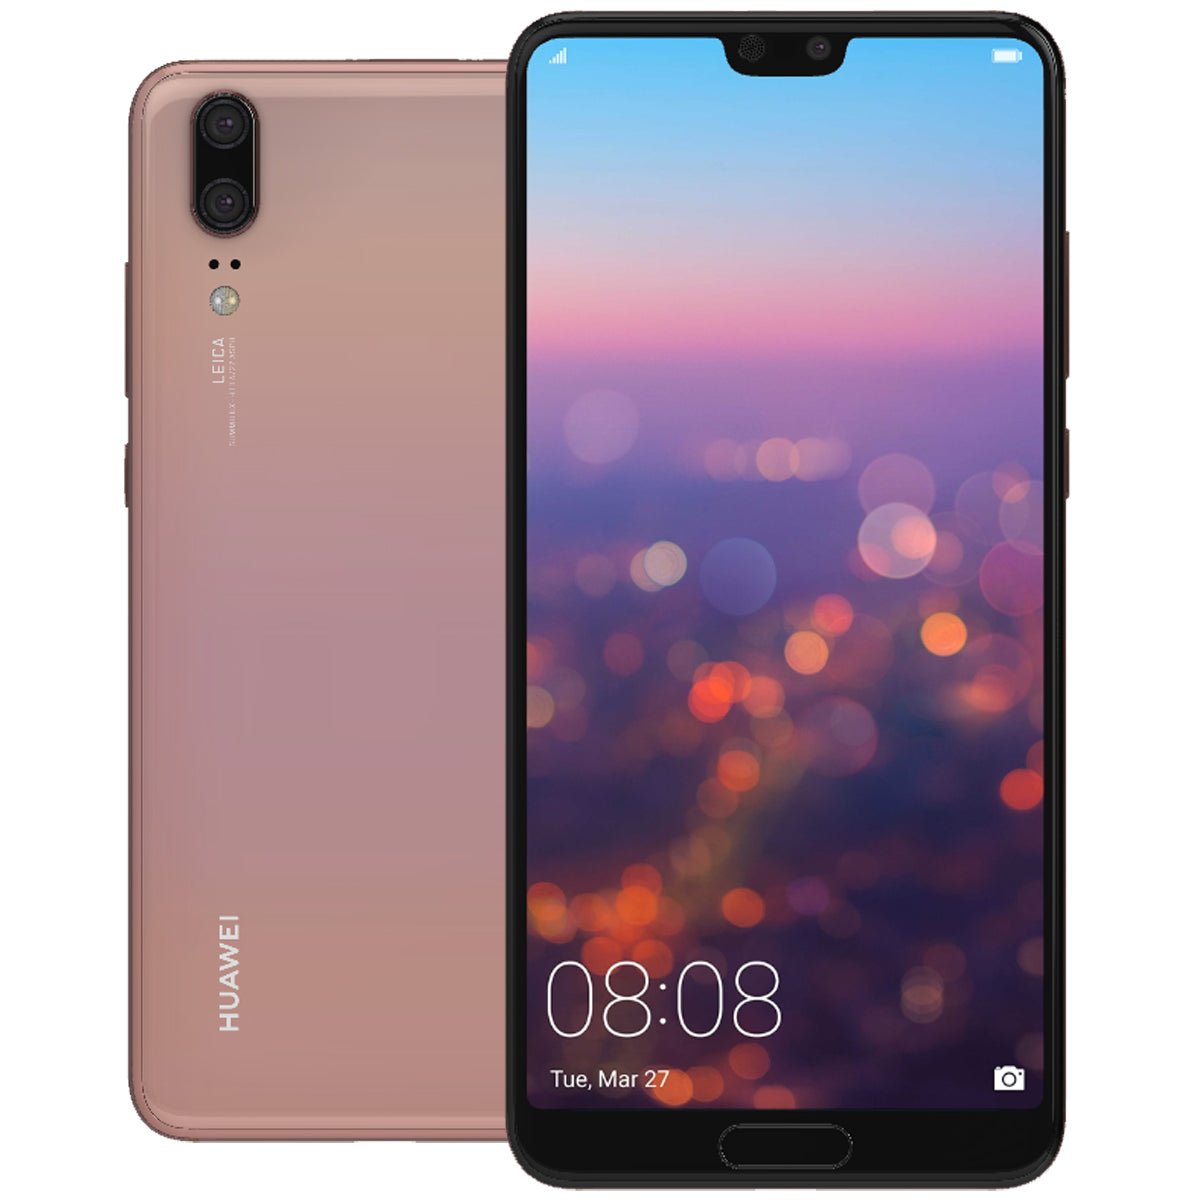 Huawei P20 GOOD Condition Unlocked Smartphone - RueZone Smartphone Pink Gold 64GB